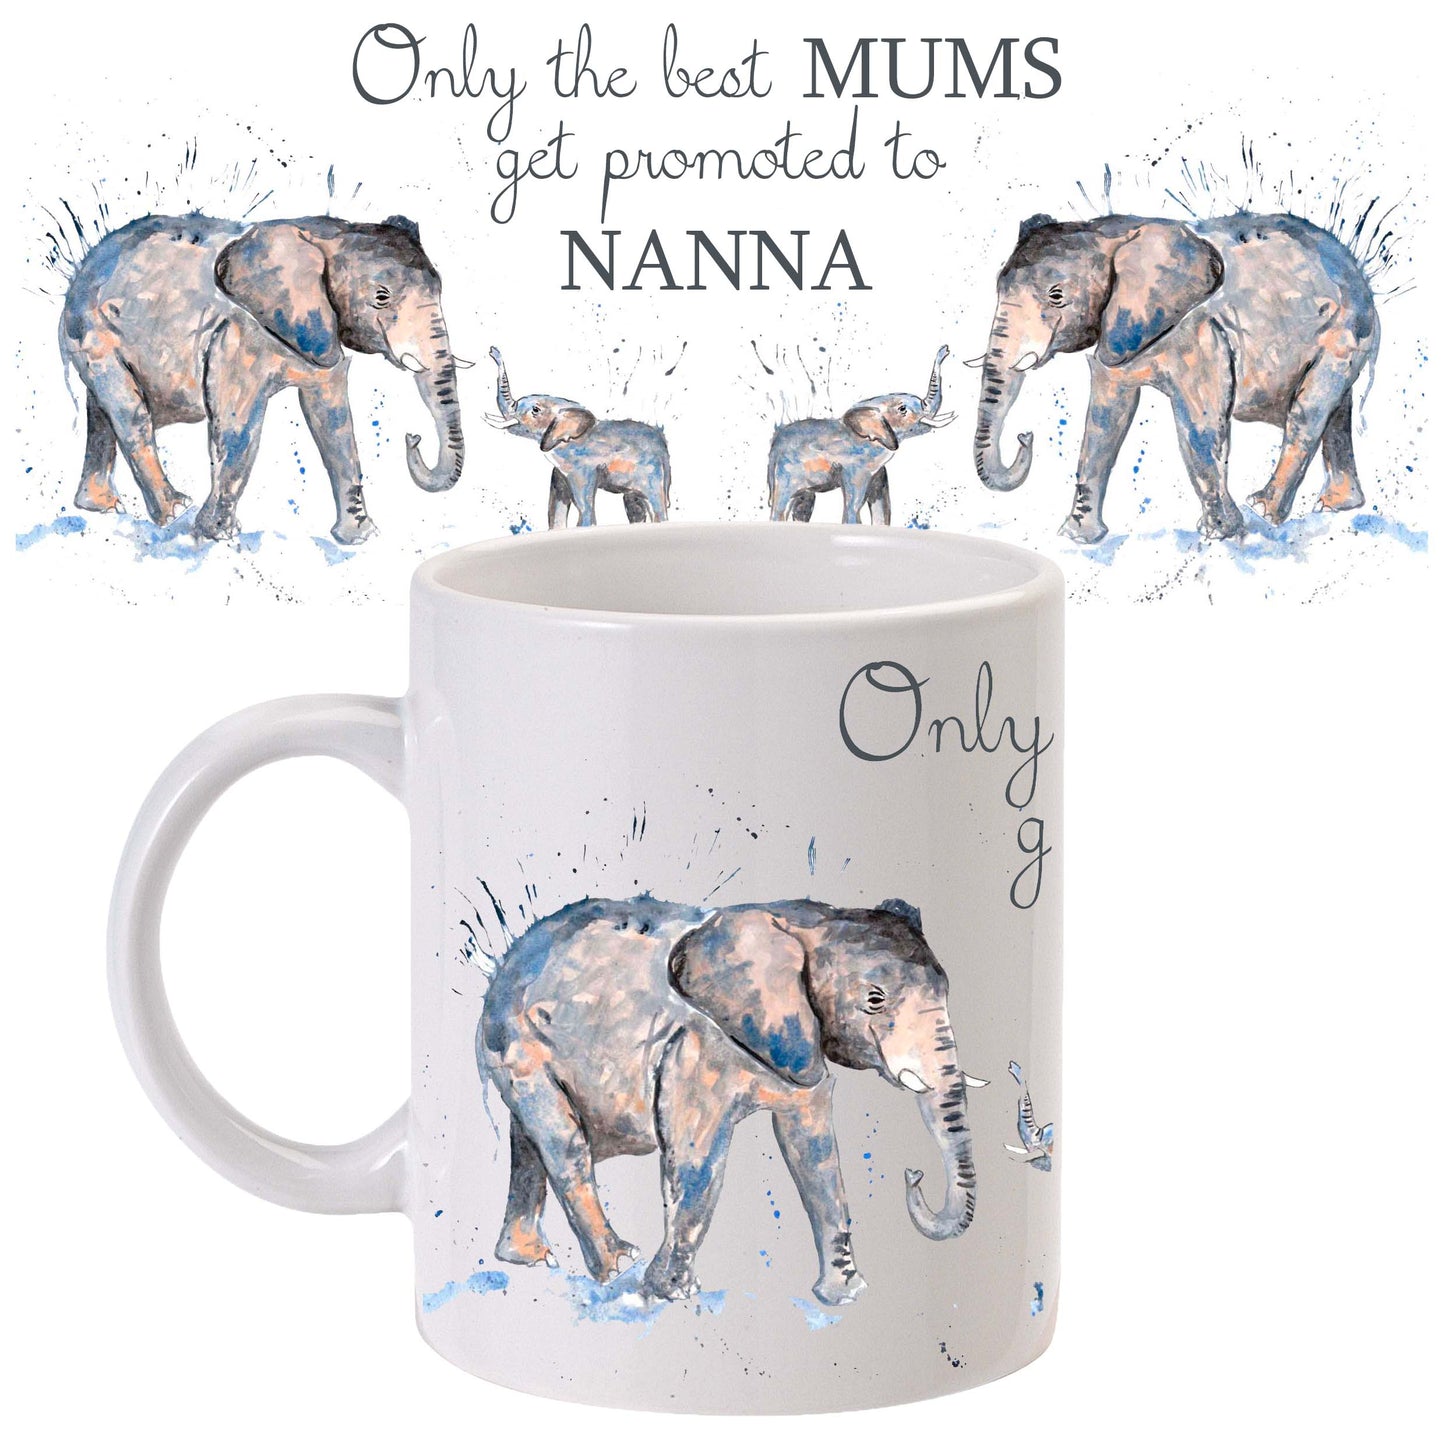 'Mum promotion to Nanna' mug